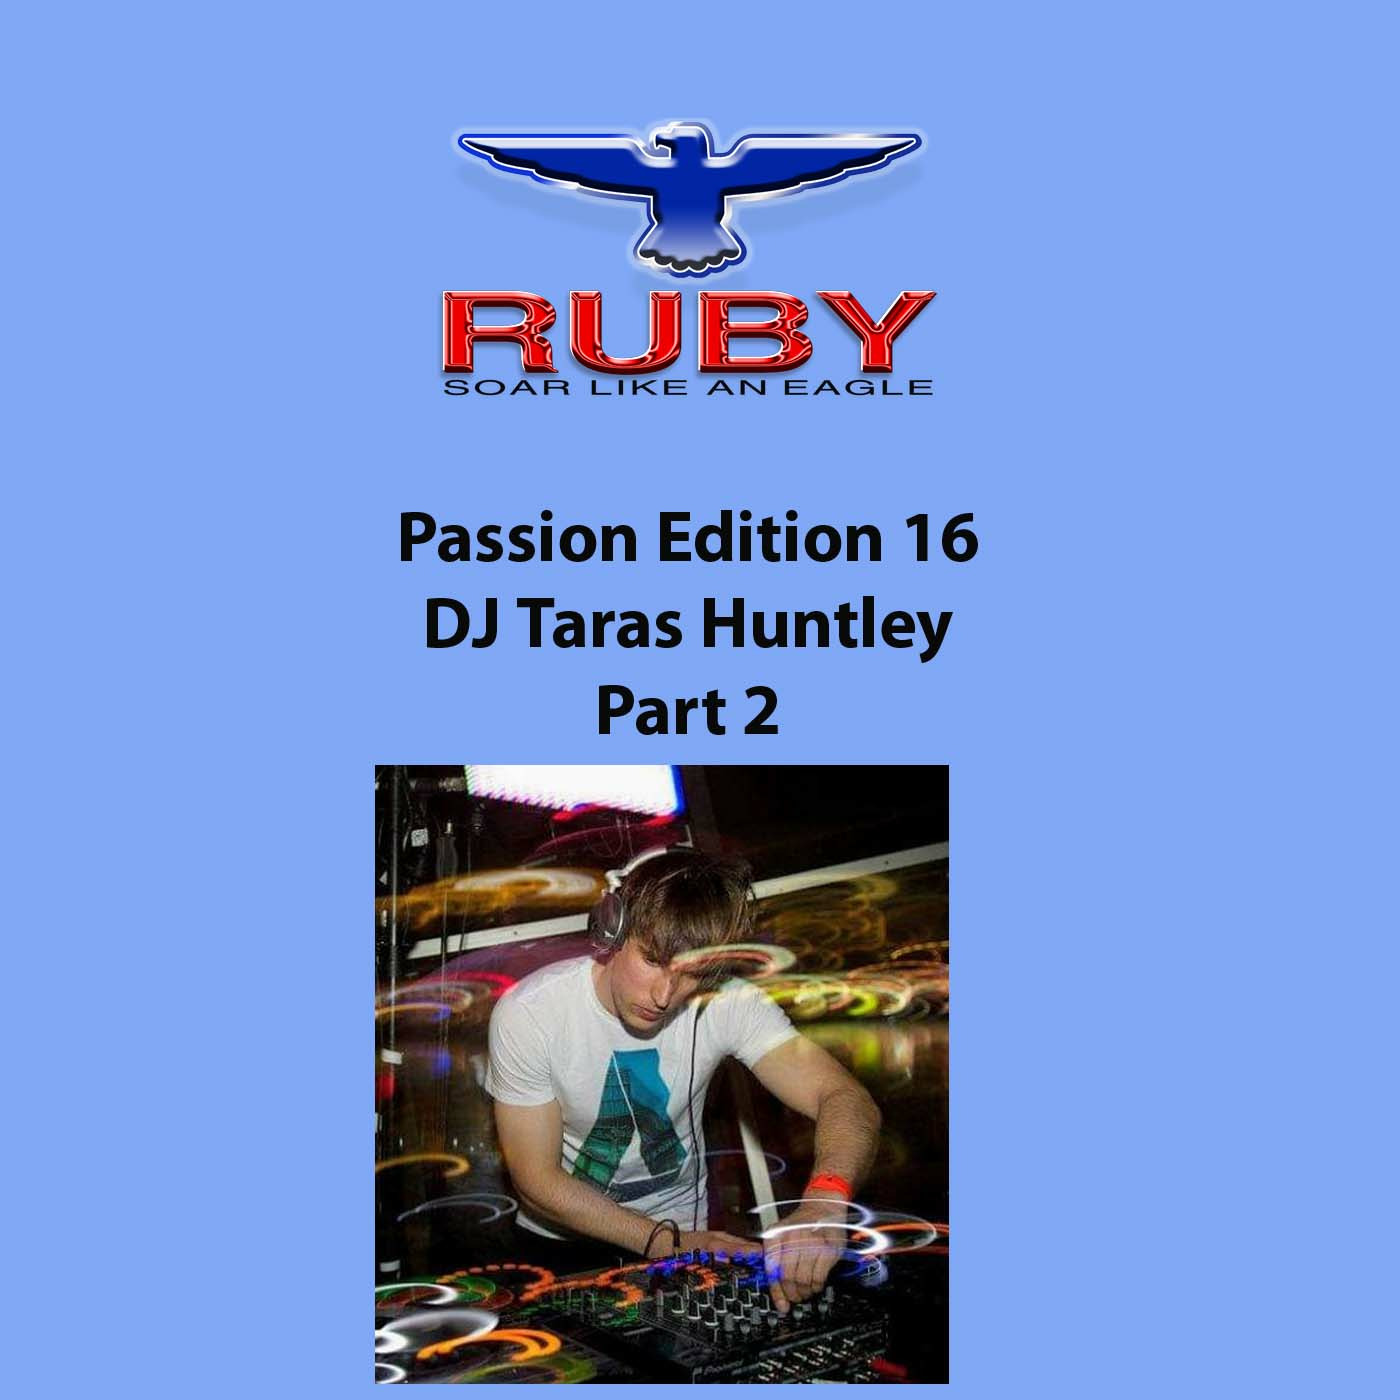 Episode 92: 92 - Passion 16 - DJ Taras Huntley - Part 2